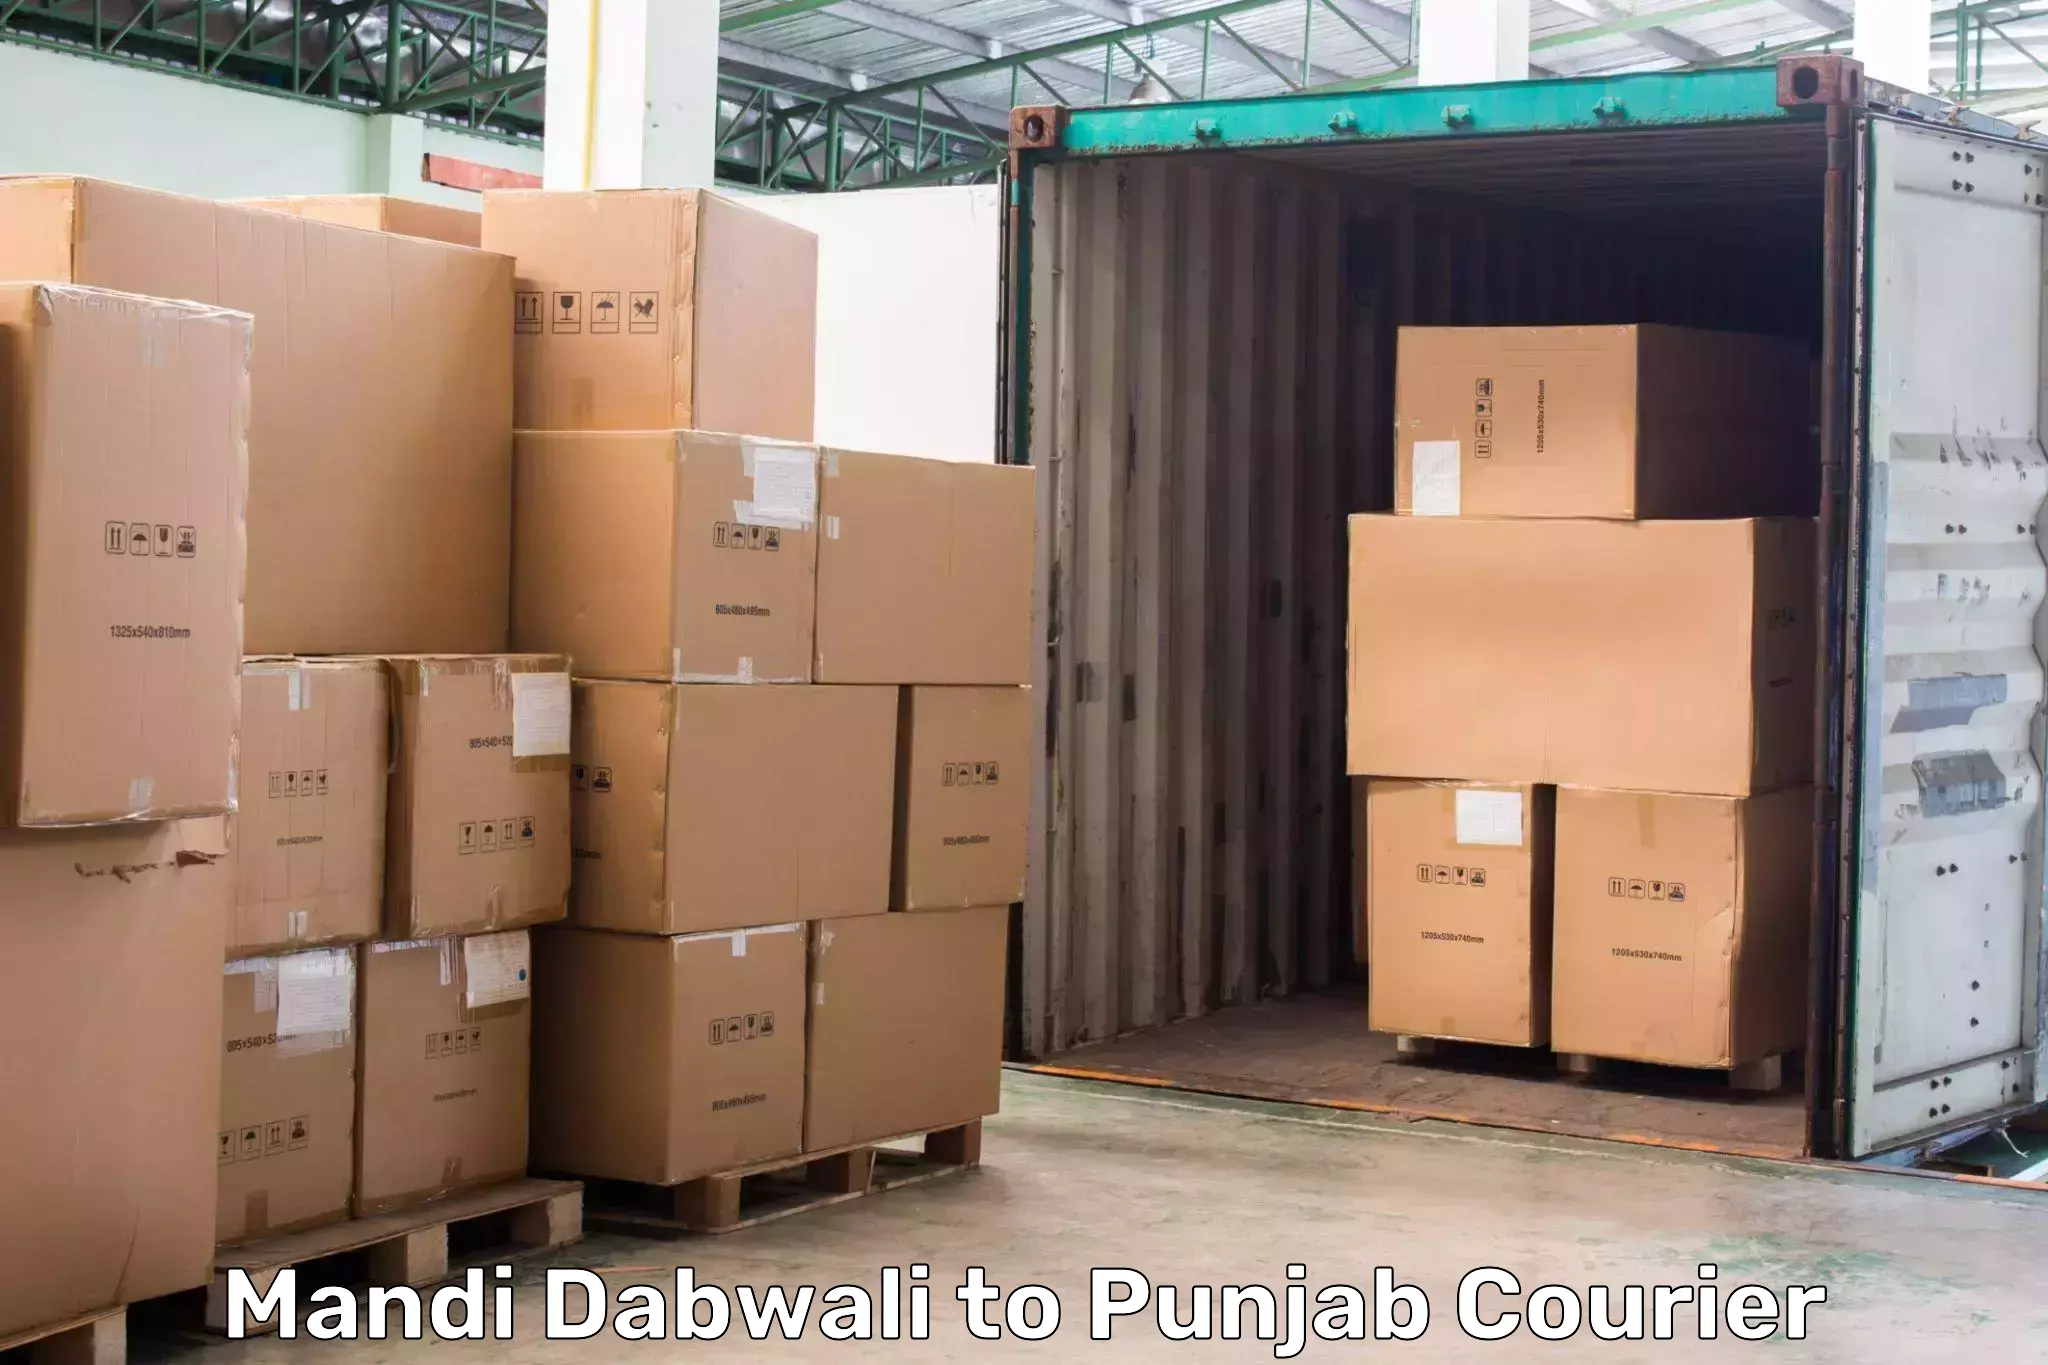 Express postal services in Mandi Dabwali to Amritsar